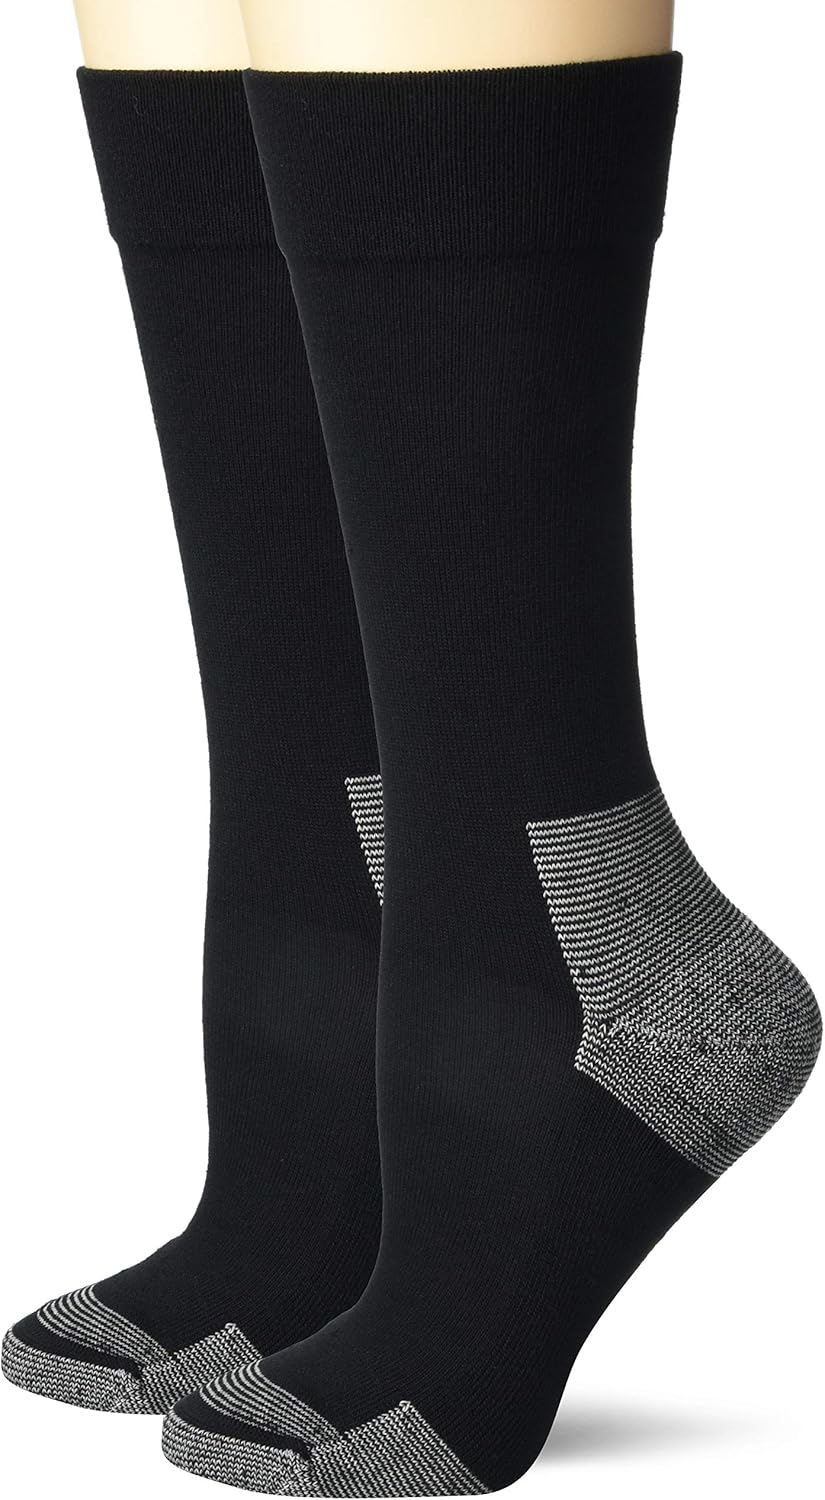 Dr. Scholl's Women's American Lifestyle Advanced Relief Blister Guard Crew Socks 2 Pair, Black, Shoe Size: 4-10 DSW22185C2U2001